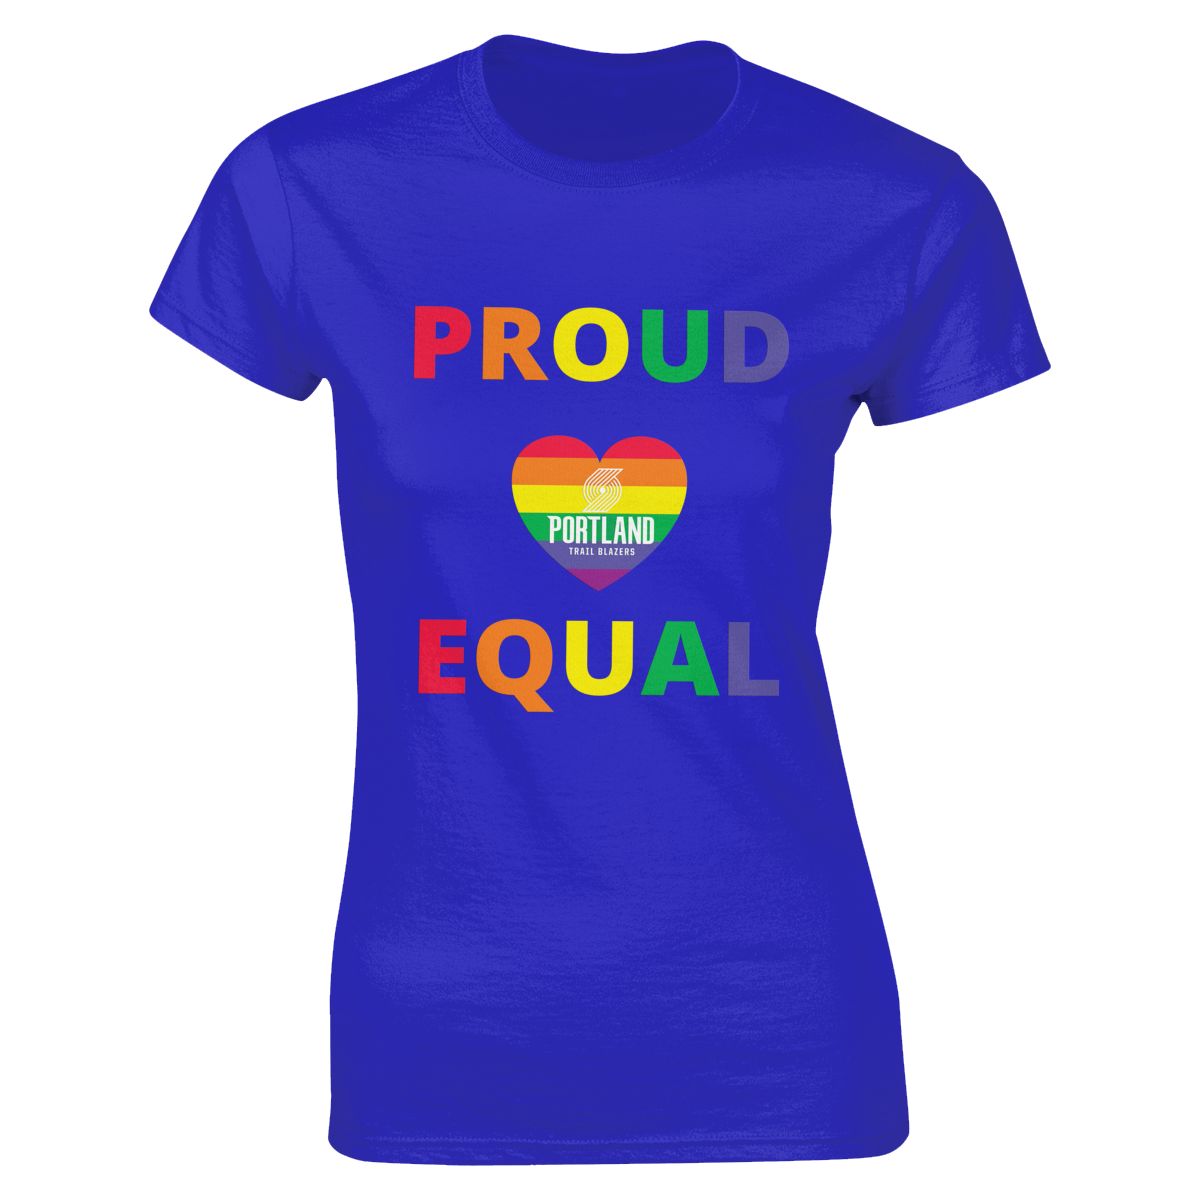 Portland Trail Blazers Proud & Equal Pride Women's Soft Cotton T-Shirt